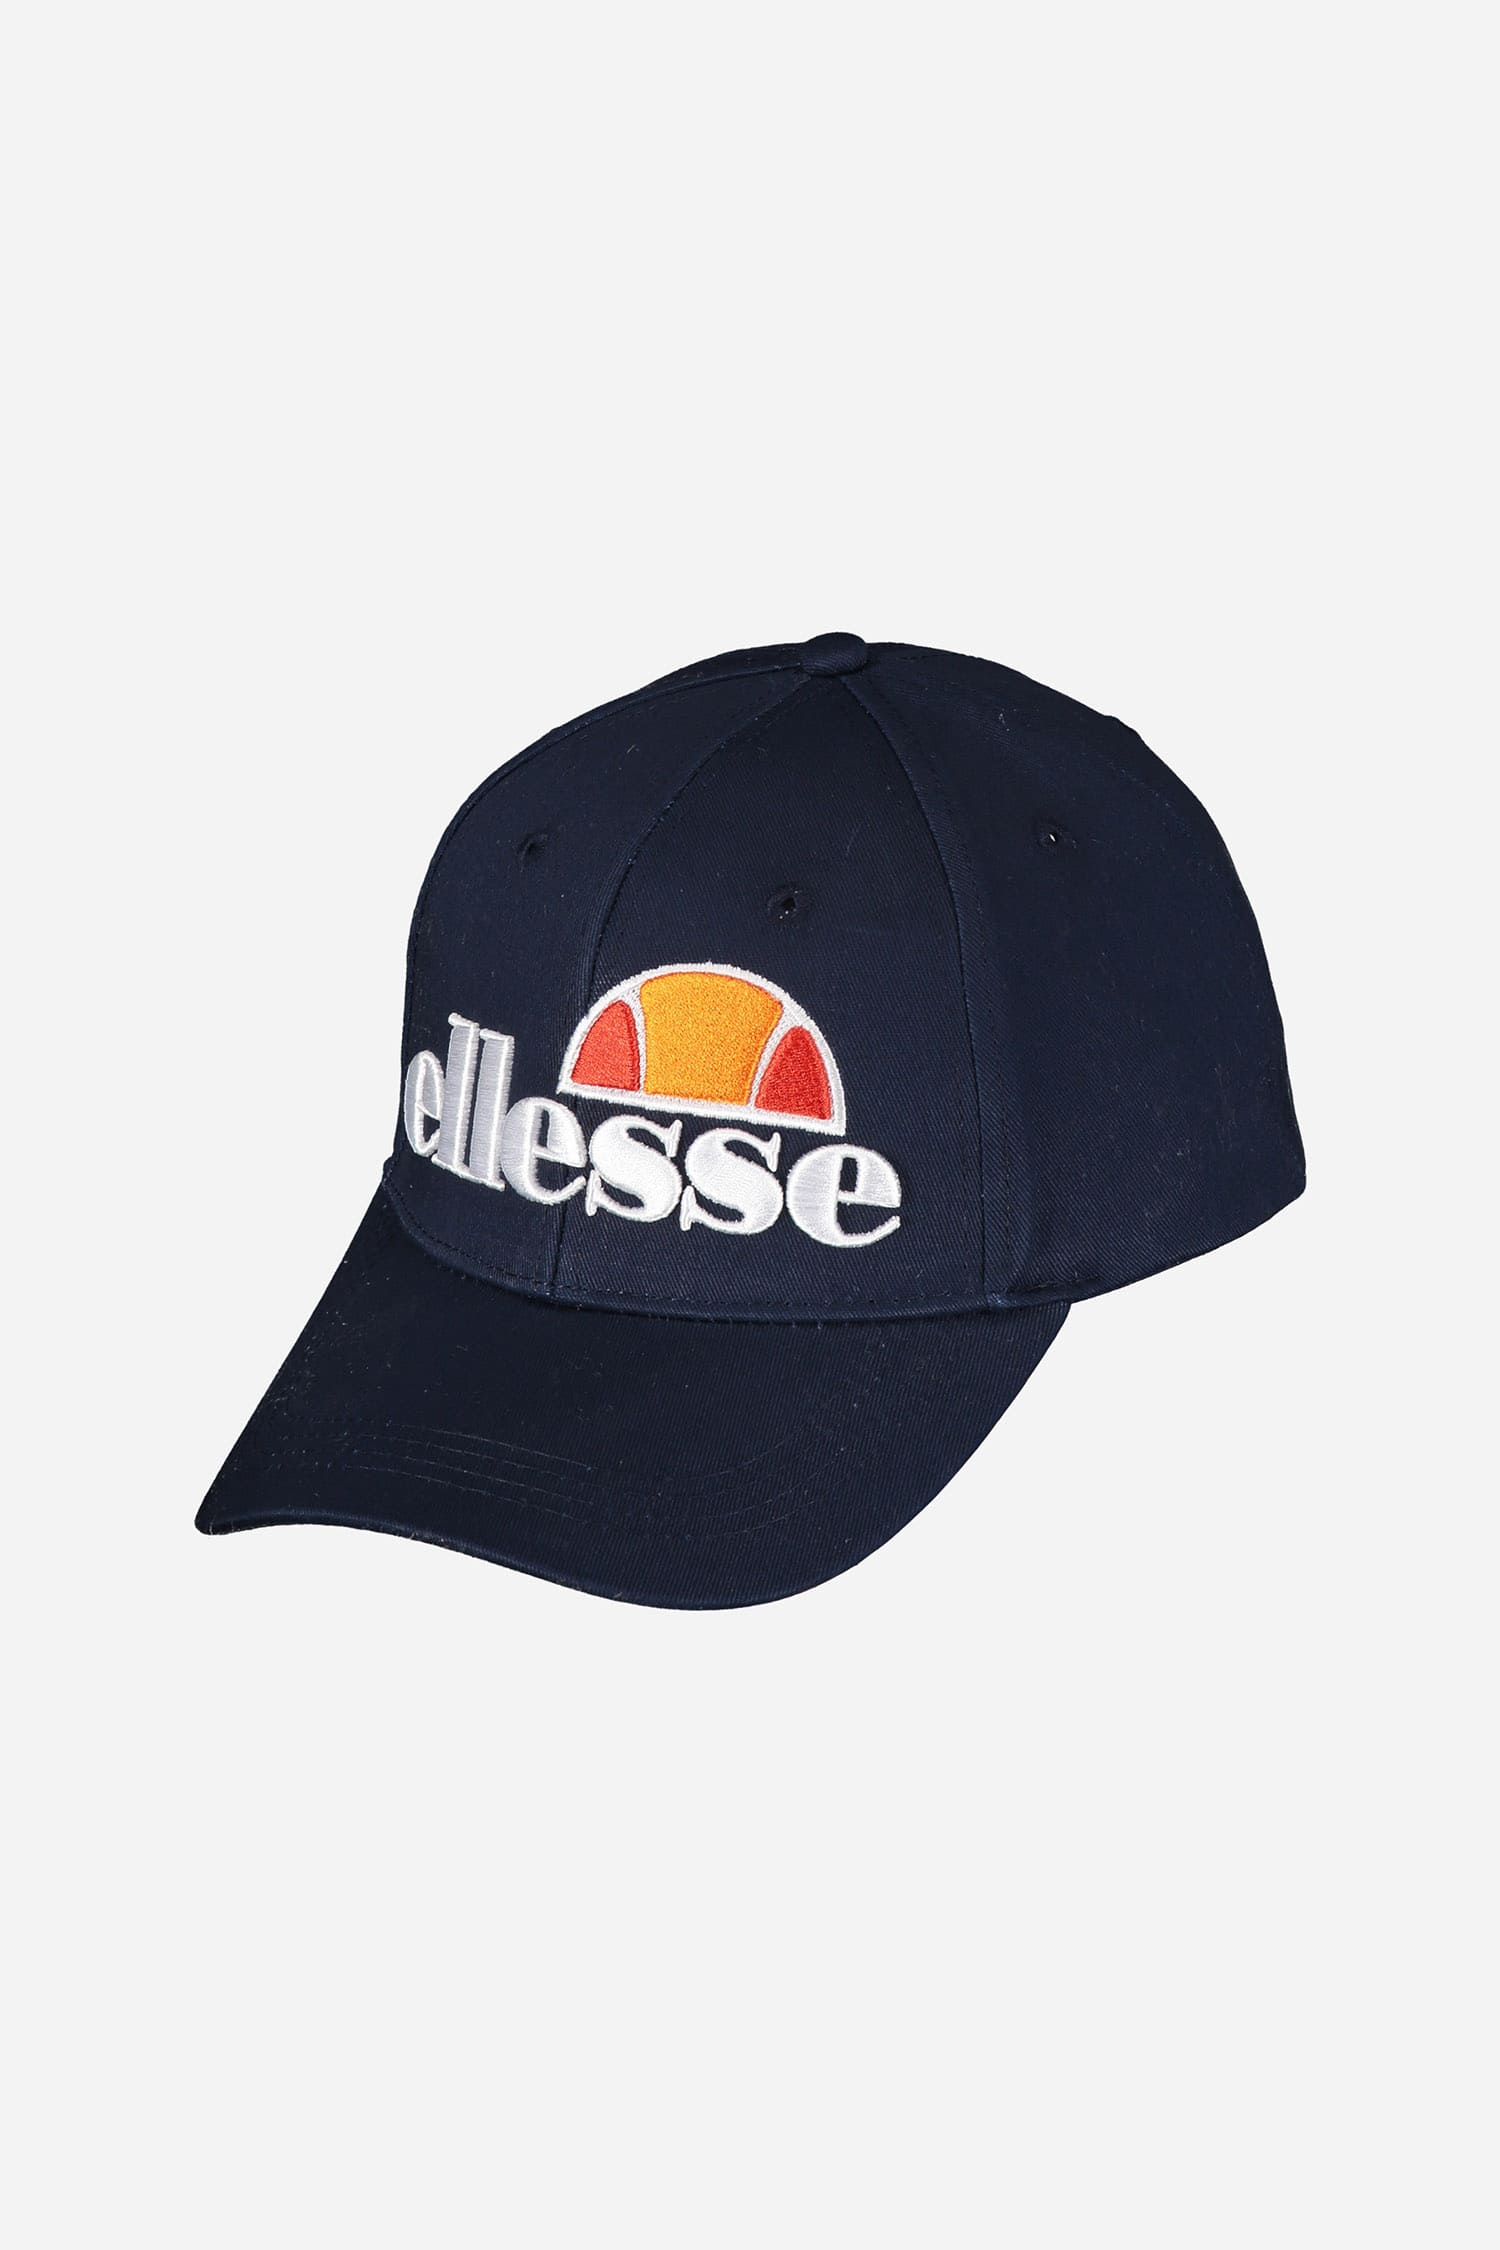 ELLESSE BASEBALL CAP